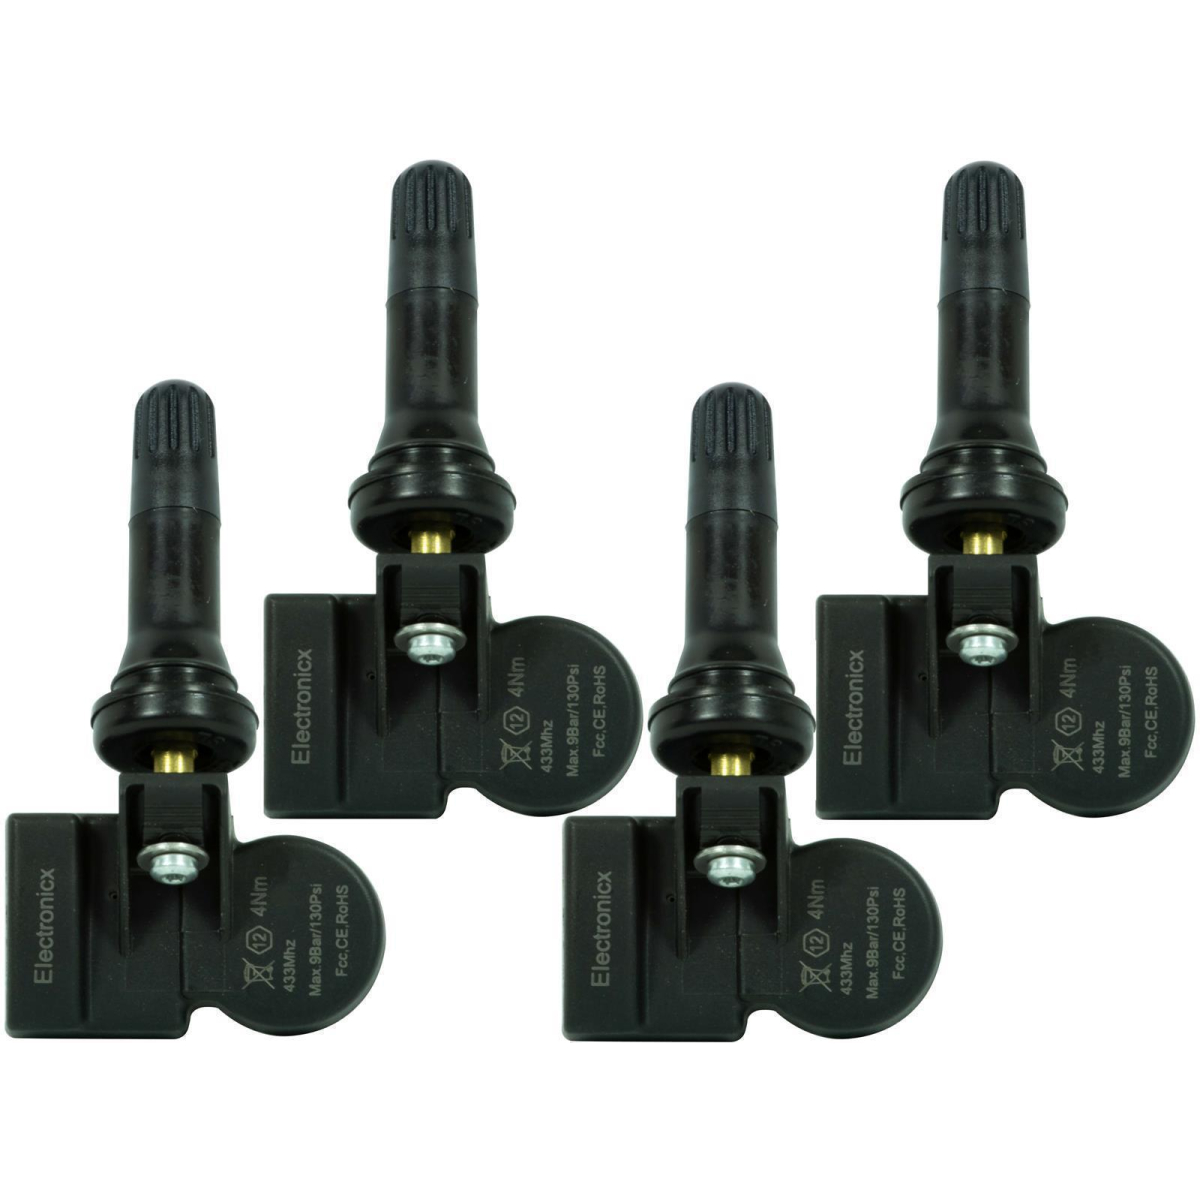 4 tire pressure sensors rdks sensors rubber valve for Foton Savanna 01.2015-12.2020